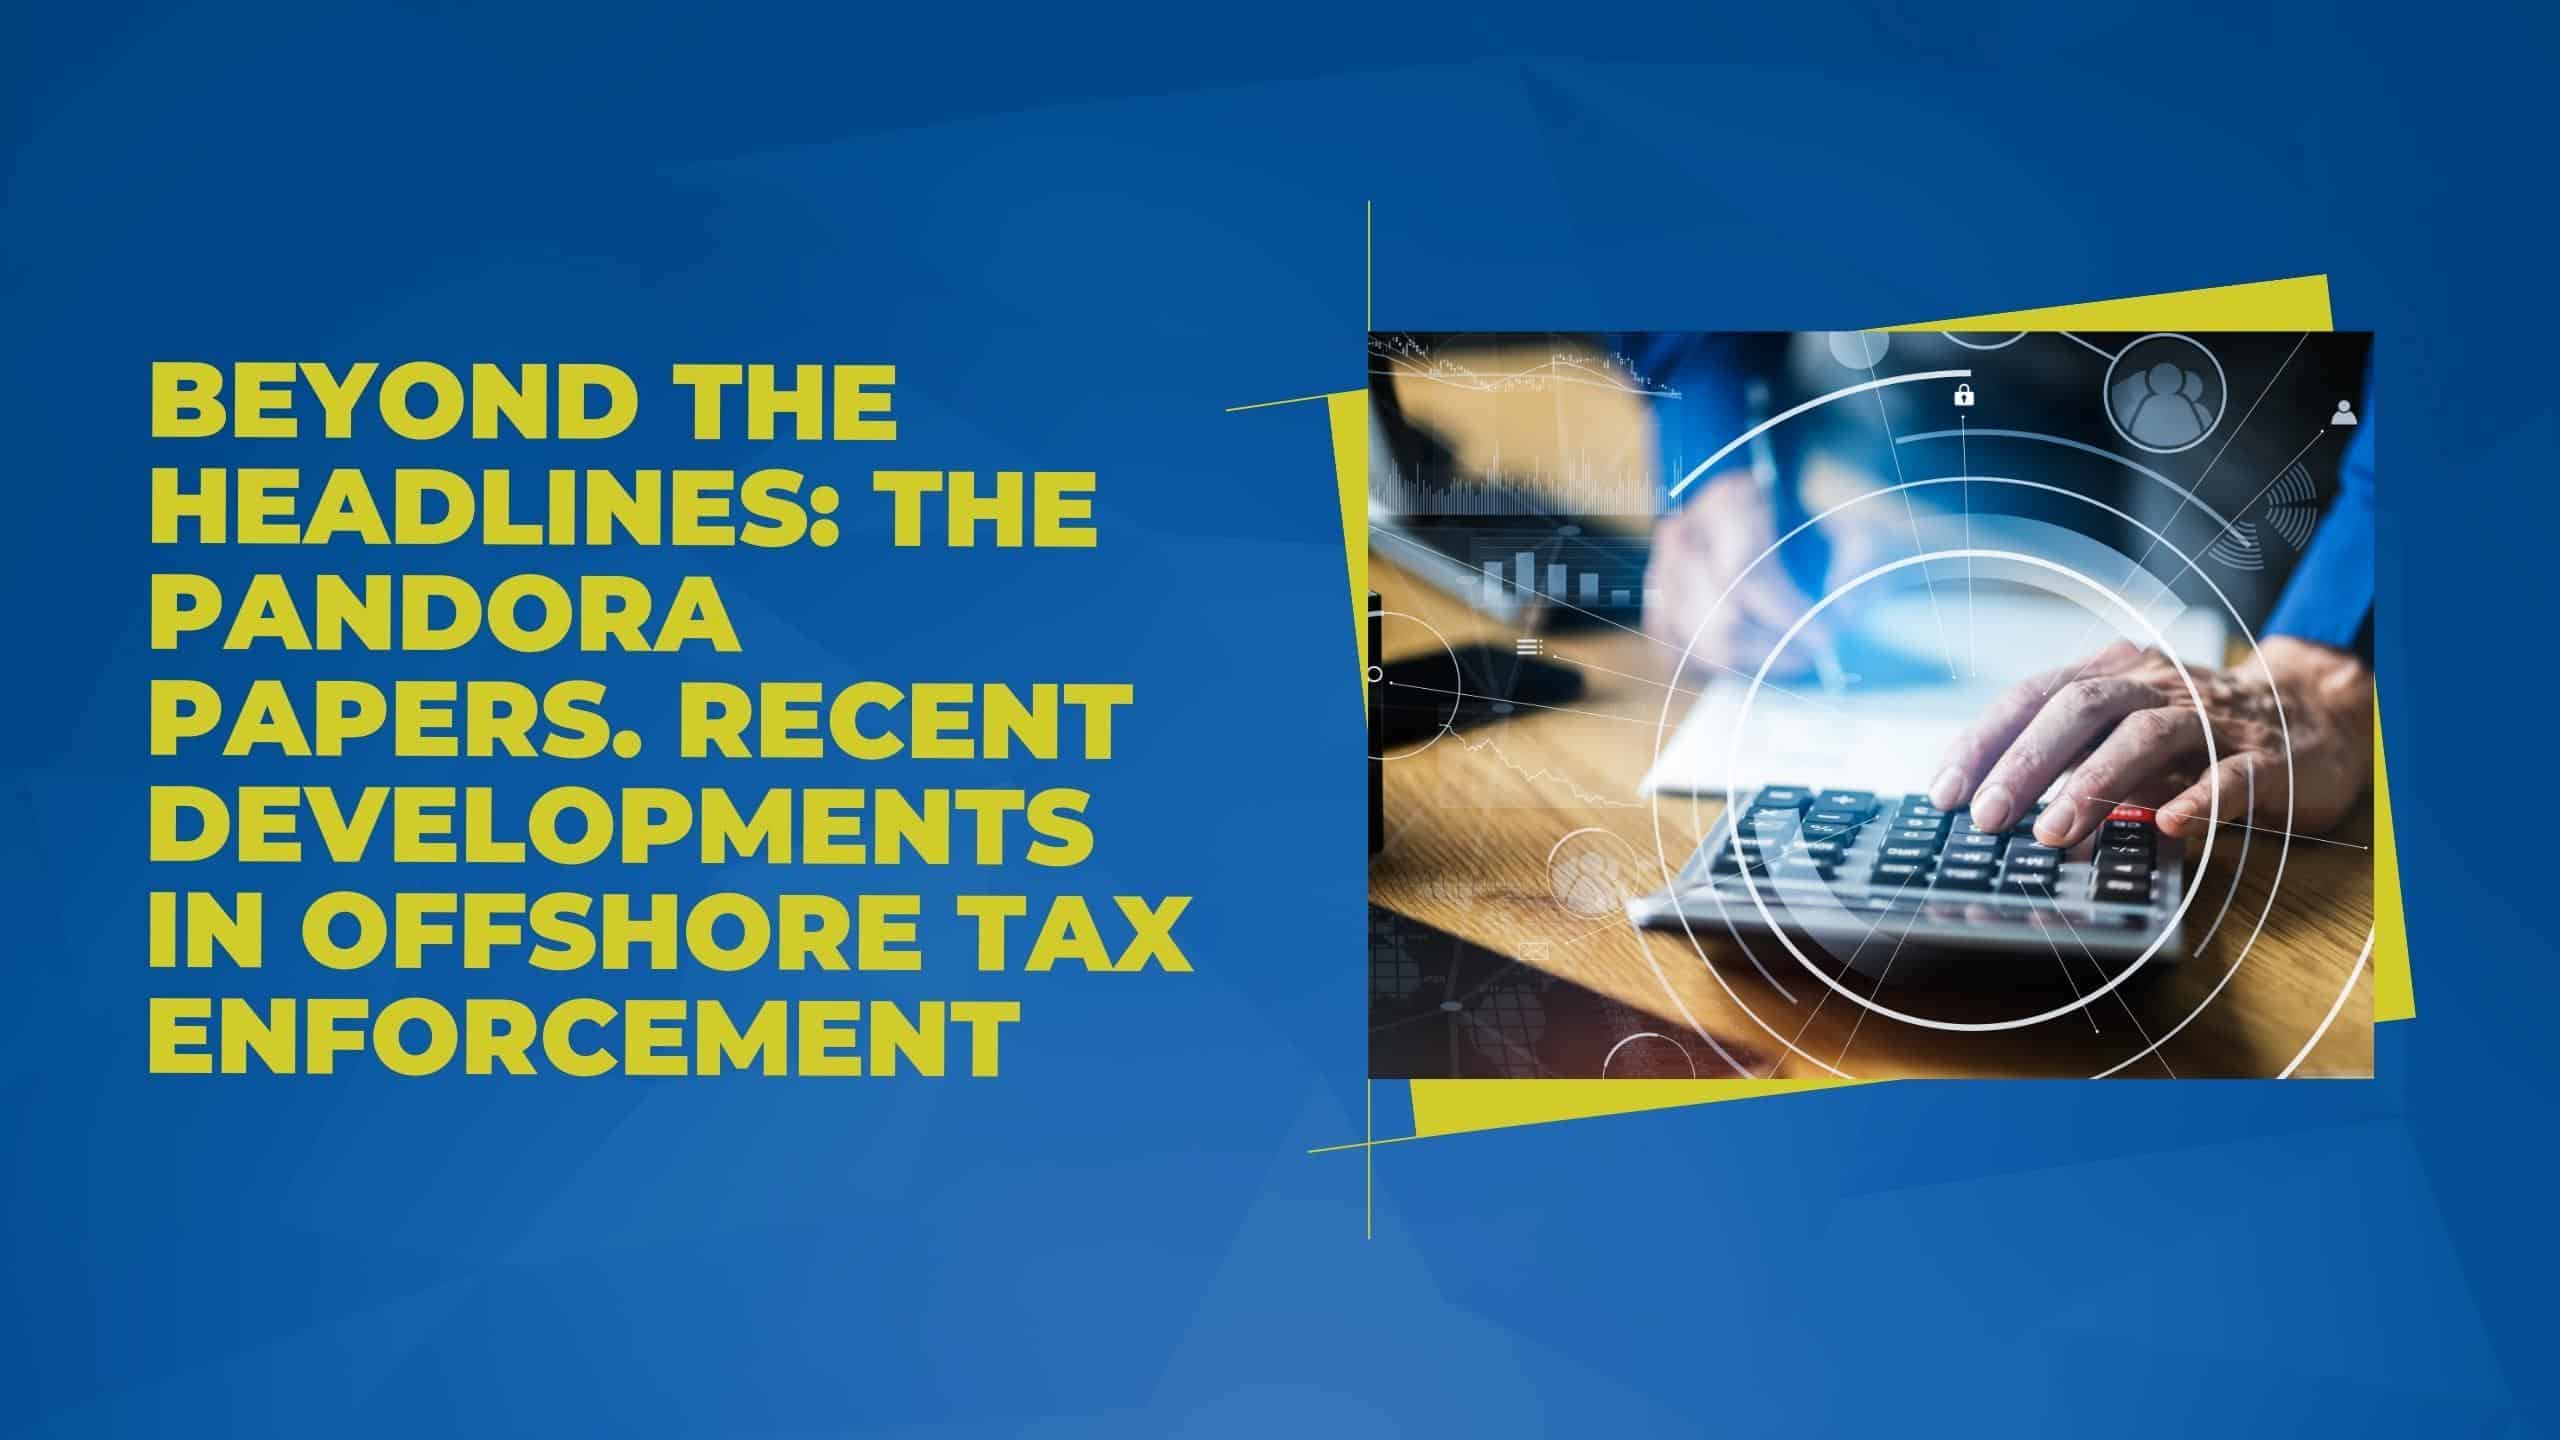 The Pandora Papers. Recent Developments in Offshore Tax Enforcement